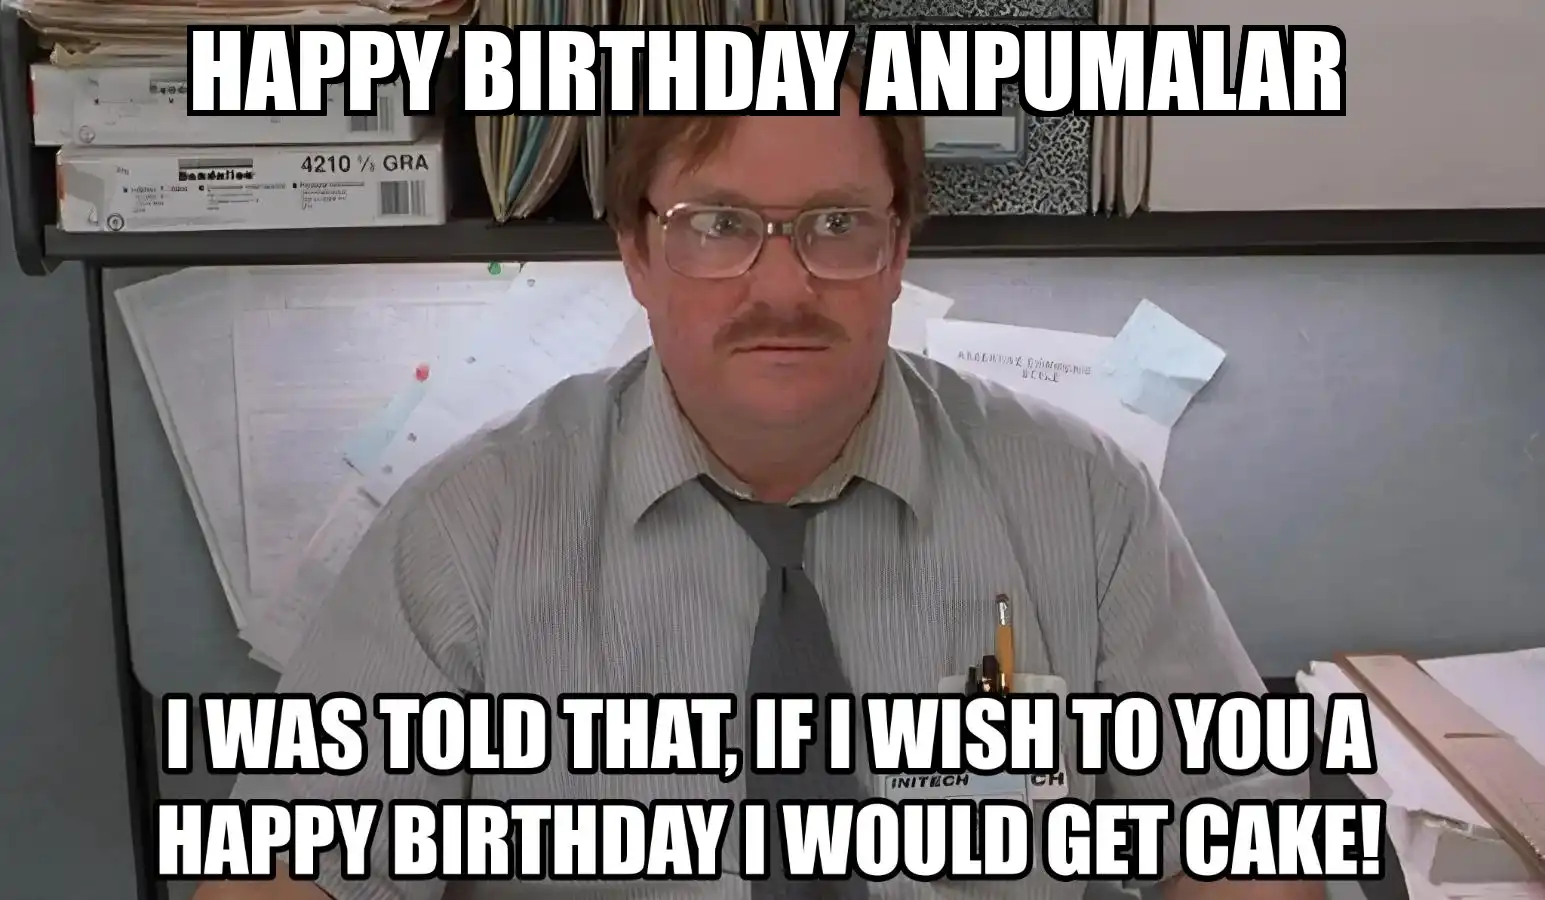 Happy Birthday Anpumalar I Would Get A Cake Meme